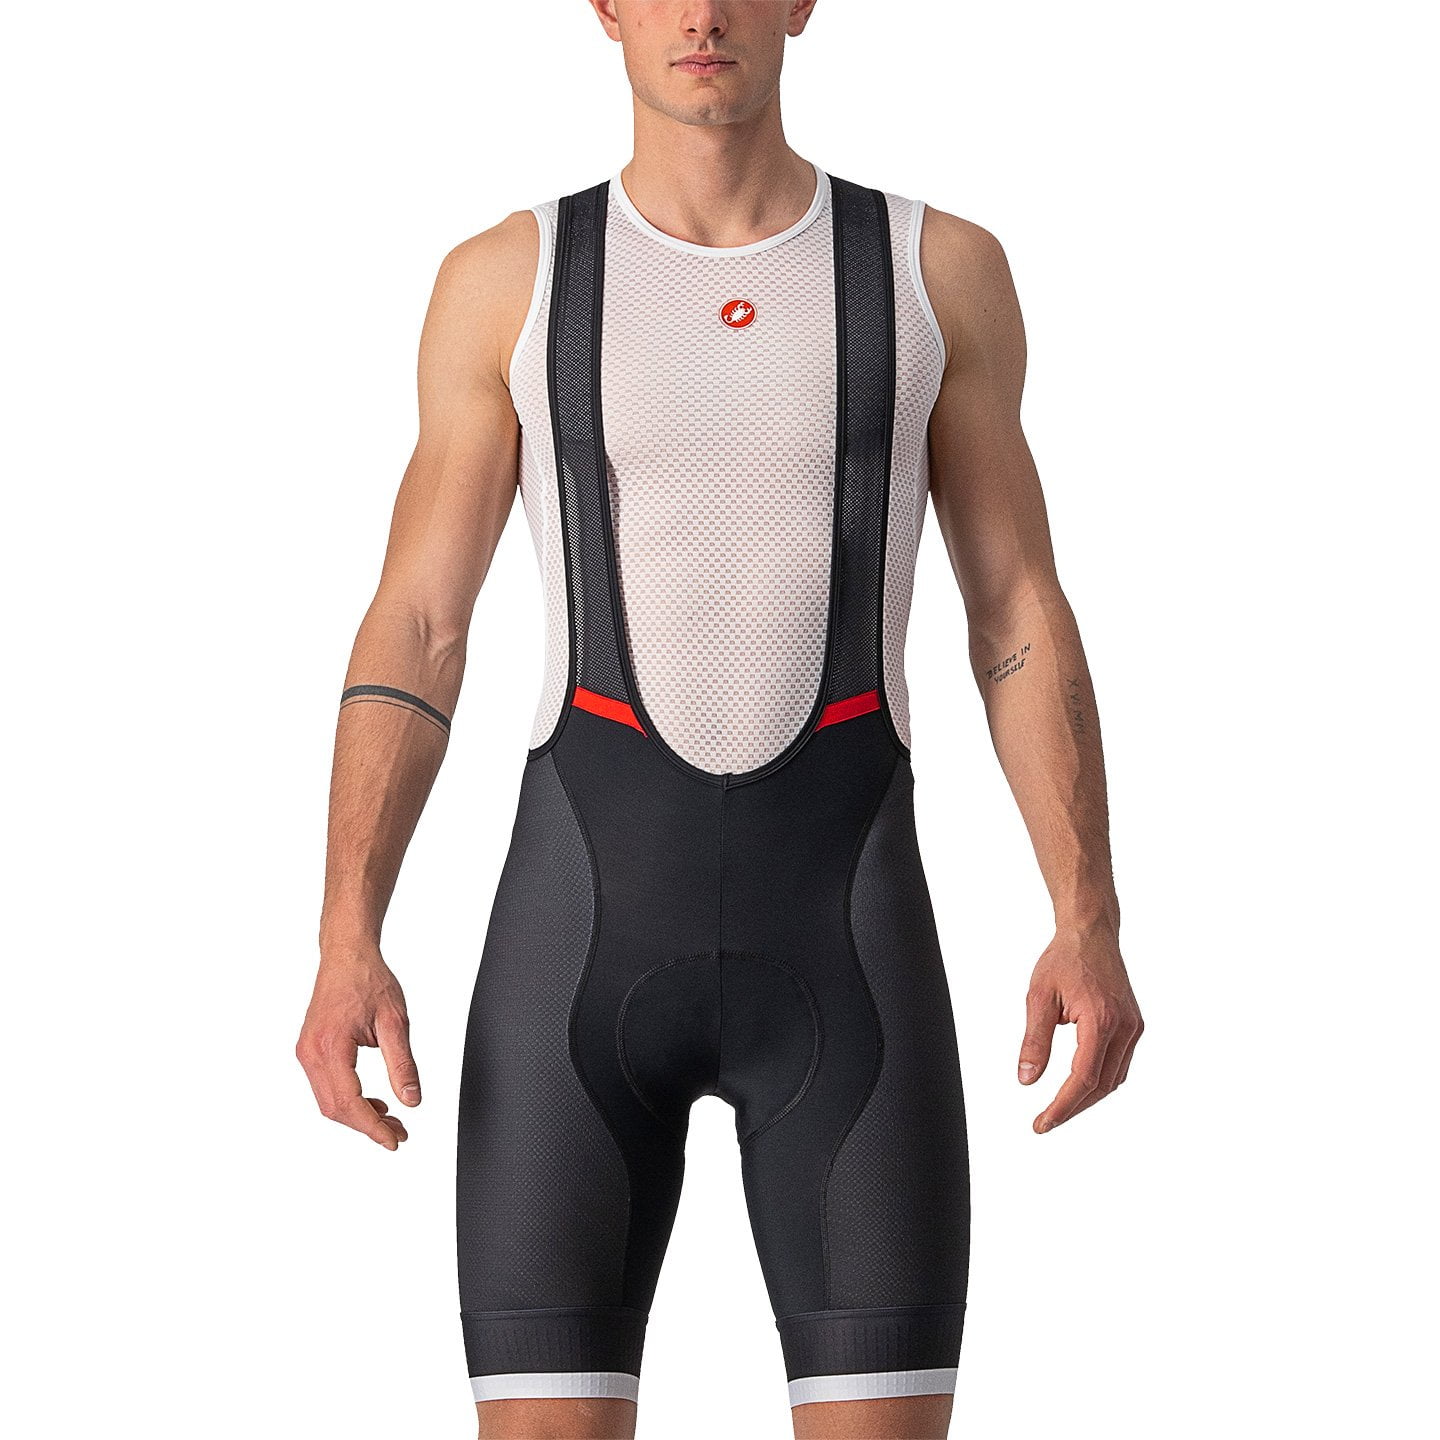 Competizione Kit Bib Shorts Bib Shorts, for men, size 2XL, Cycle shorts, Cycling clothing